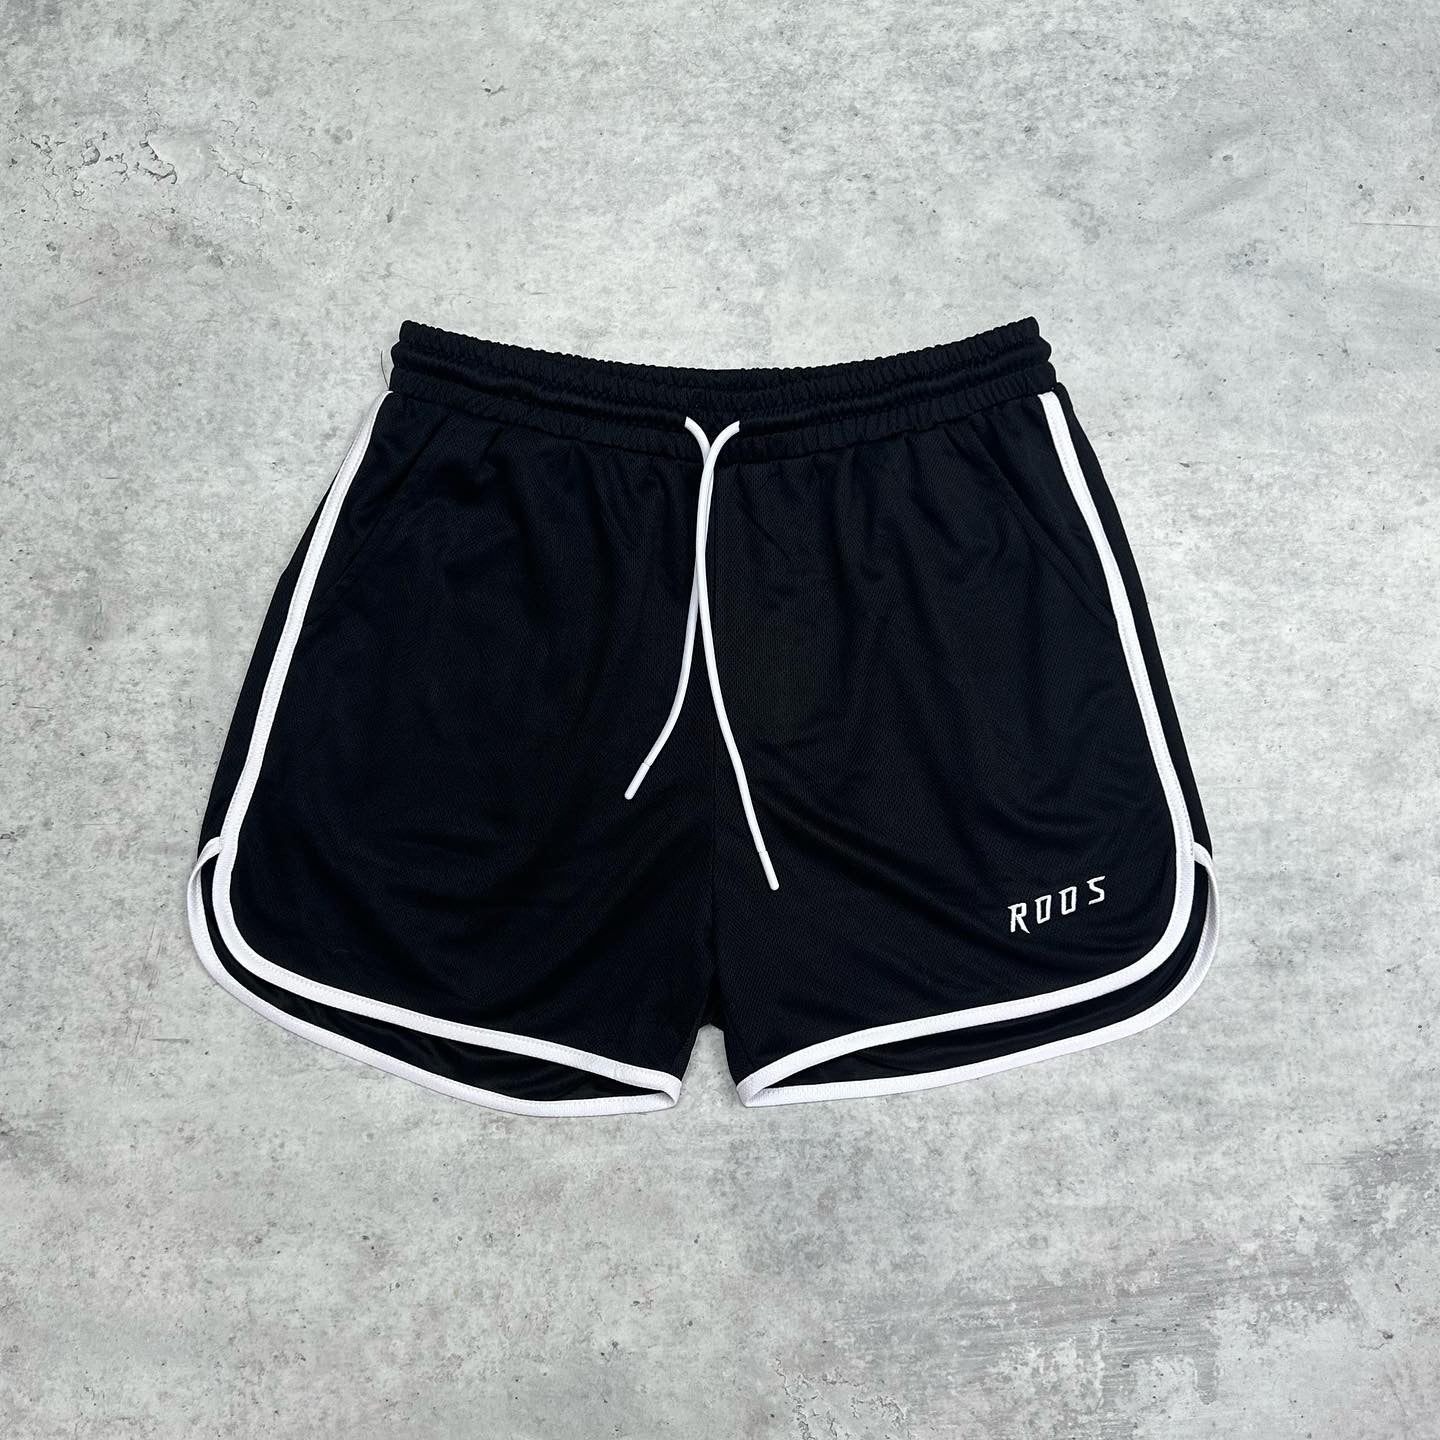 Retro Shorts - Black